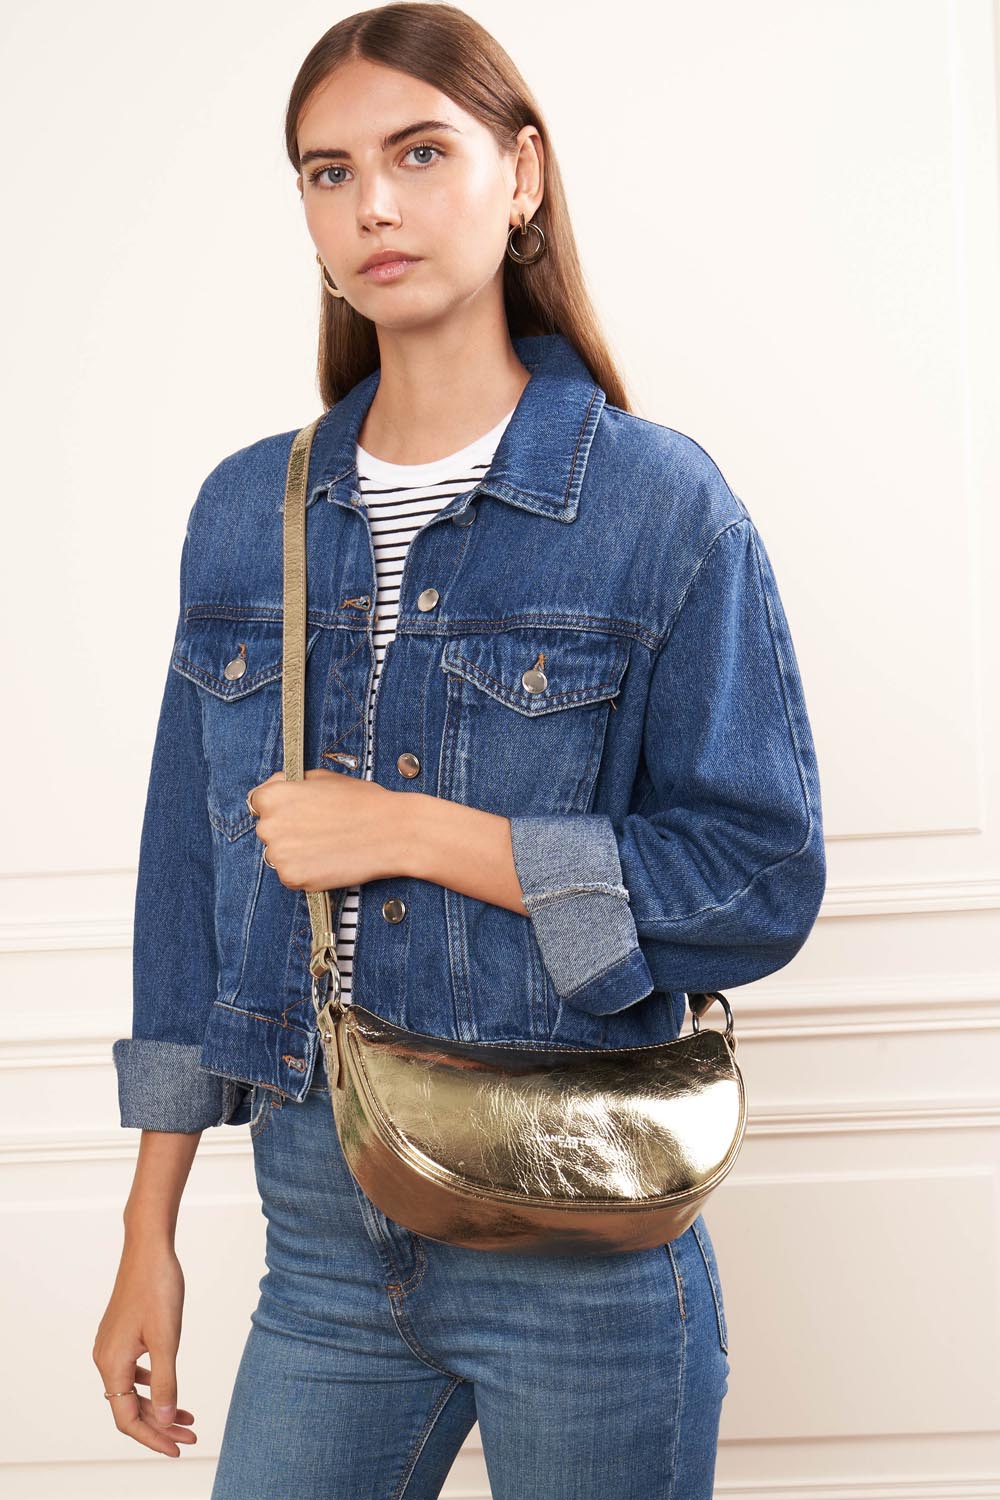 sac demi lune - fashion fIrenze #couleur_or